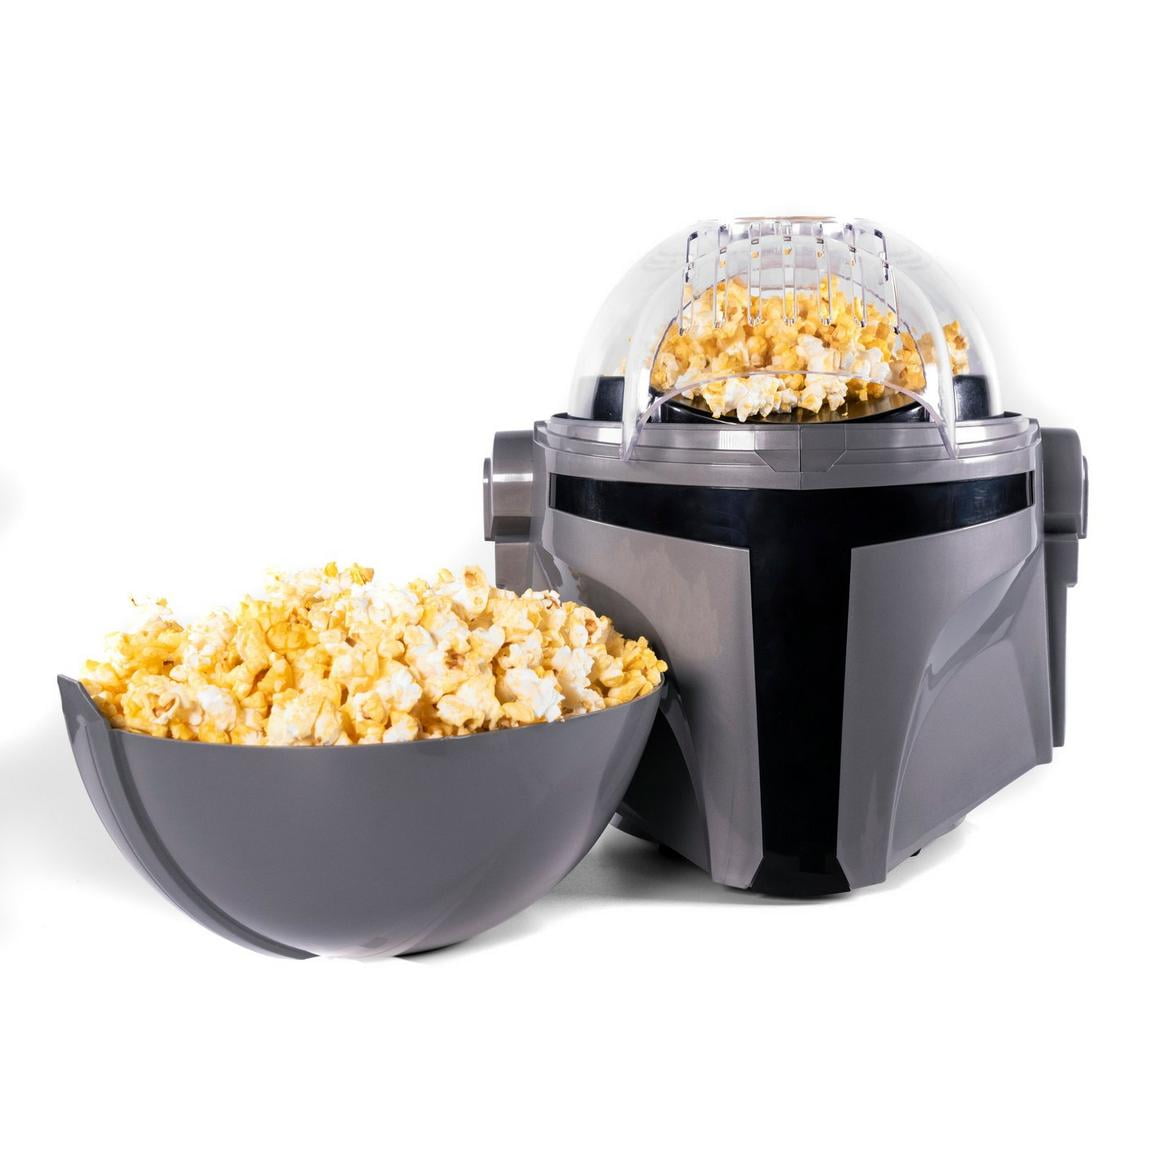 Star Wars Death Star Popcorn Maker Disney Brand Pop Corn Popper